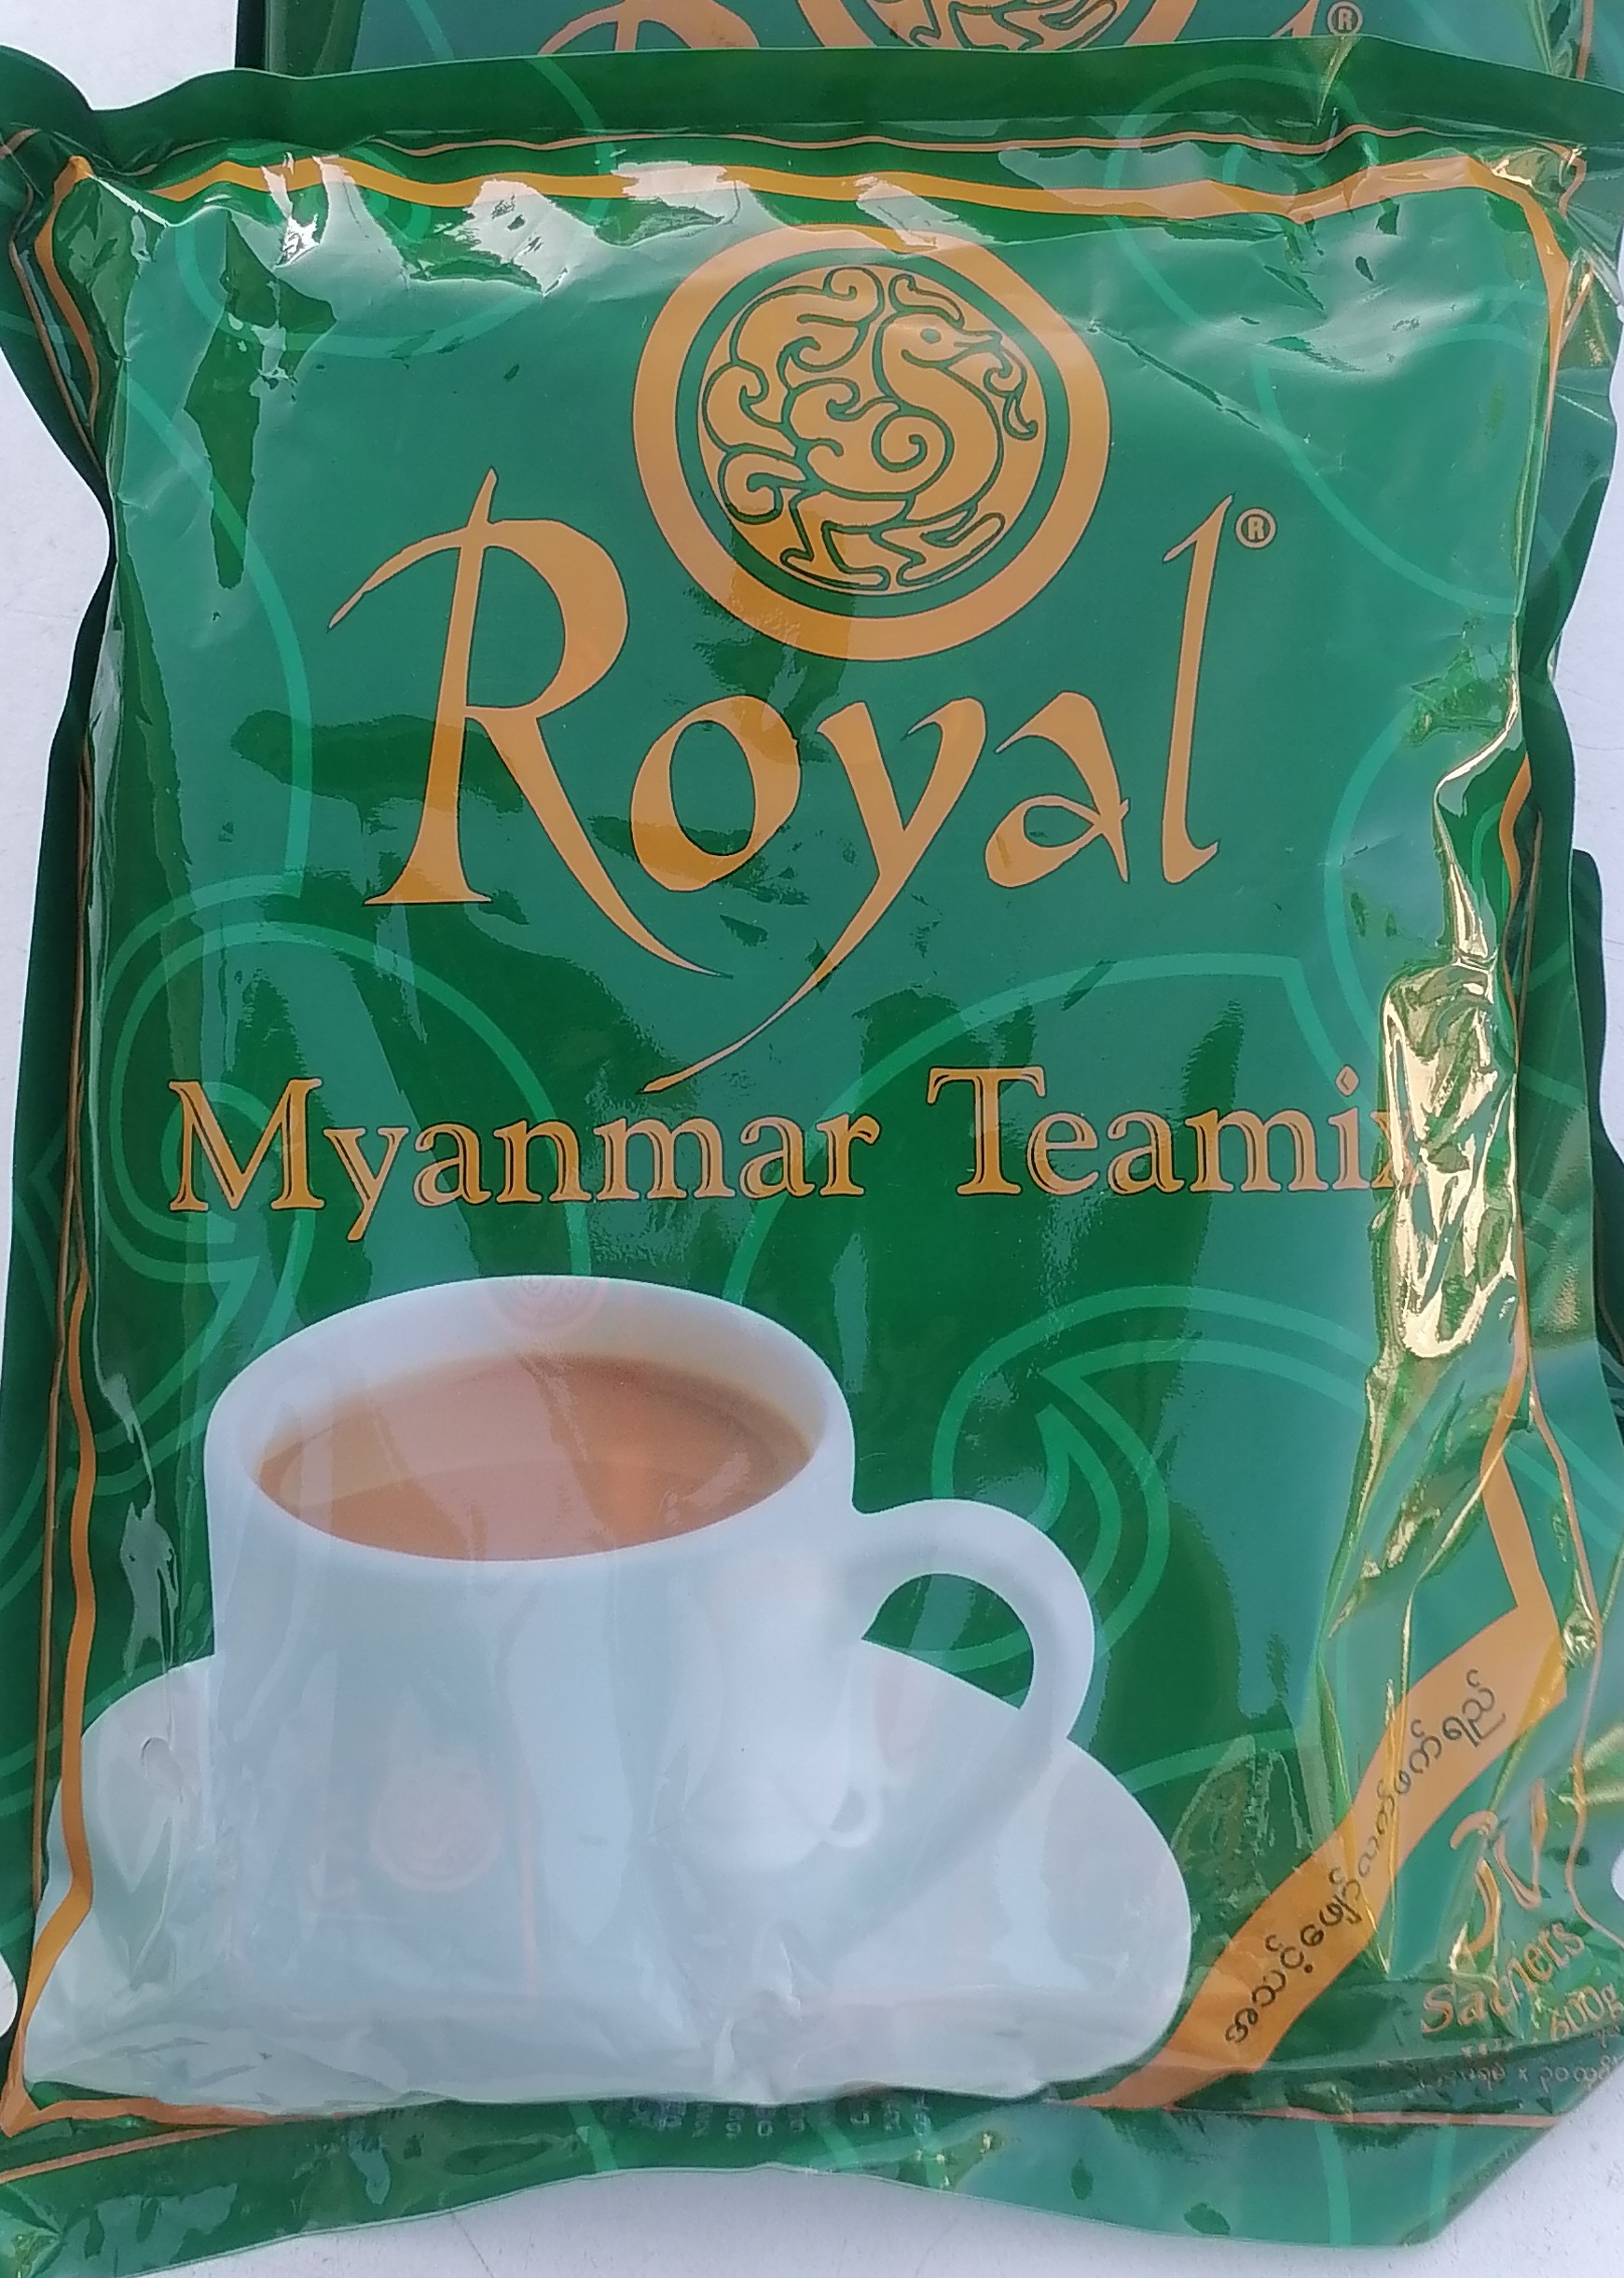 Royal Myanmar Teamix 3 in 1 ชาพม่าคุณภาพพรีเมี่ยม ขนาดบรรจุ 30 ซอง